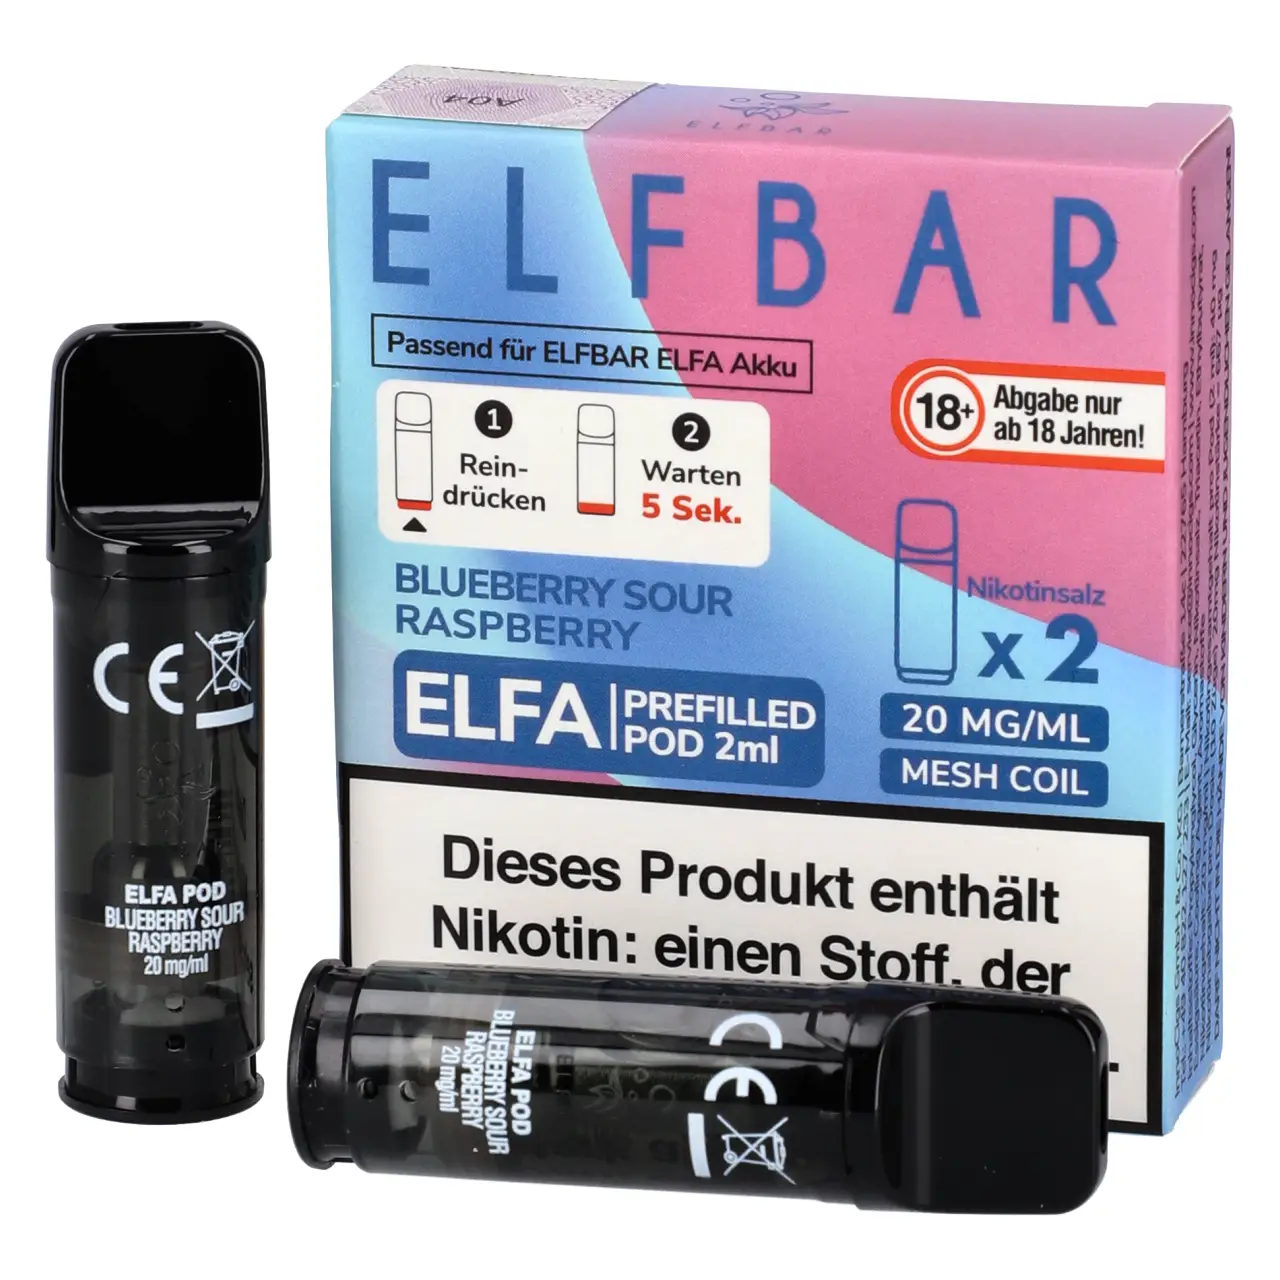 Blueberry Sour Raspberry - Elf Bar ELFA Prefilled POD für Mehrweg Vape - befüllt mit 2ml Liquid - 2er Packung